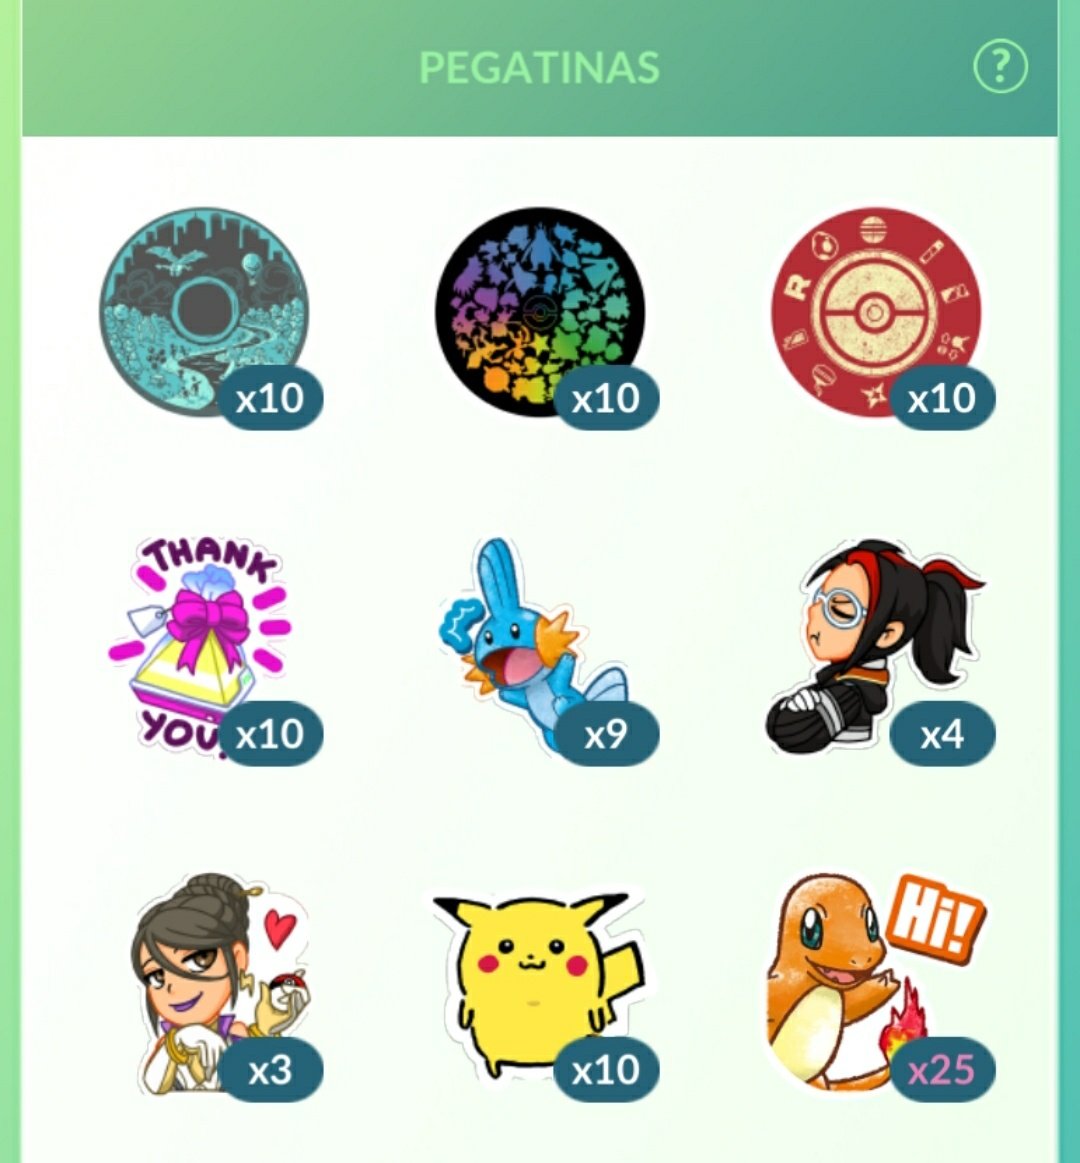 PokéXperto on X: Pegatinas disponibles en Pokémon GO sin fondo